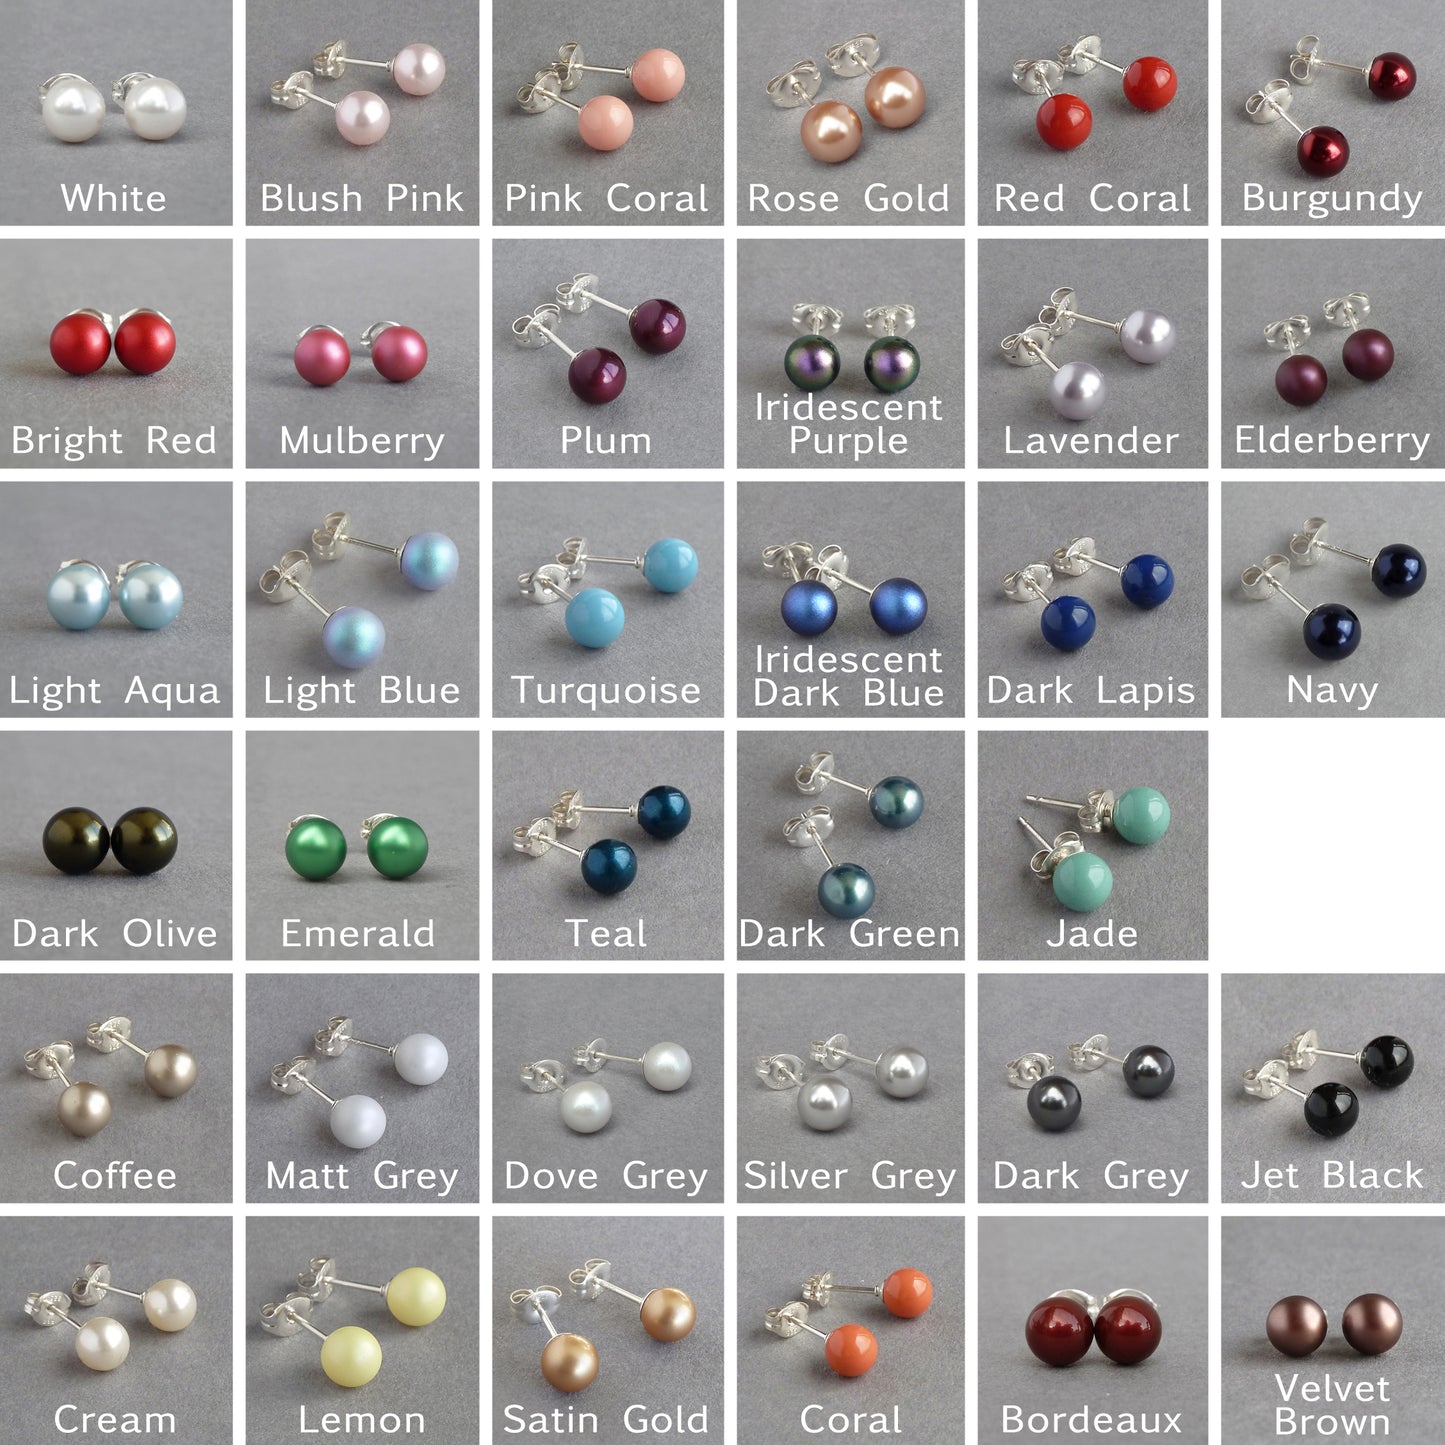 6mm Dark Grey Pearl Stud Earrings - Small, Round, Black, Glass Pearl Studs